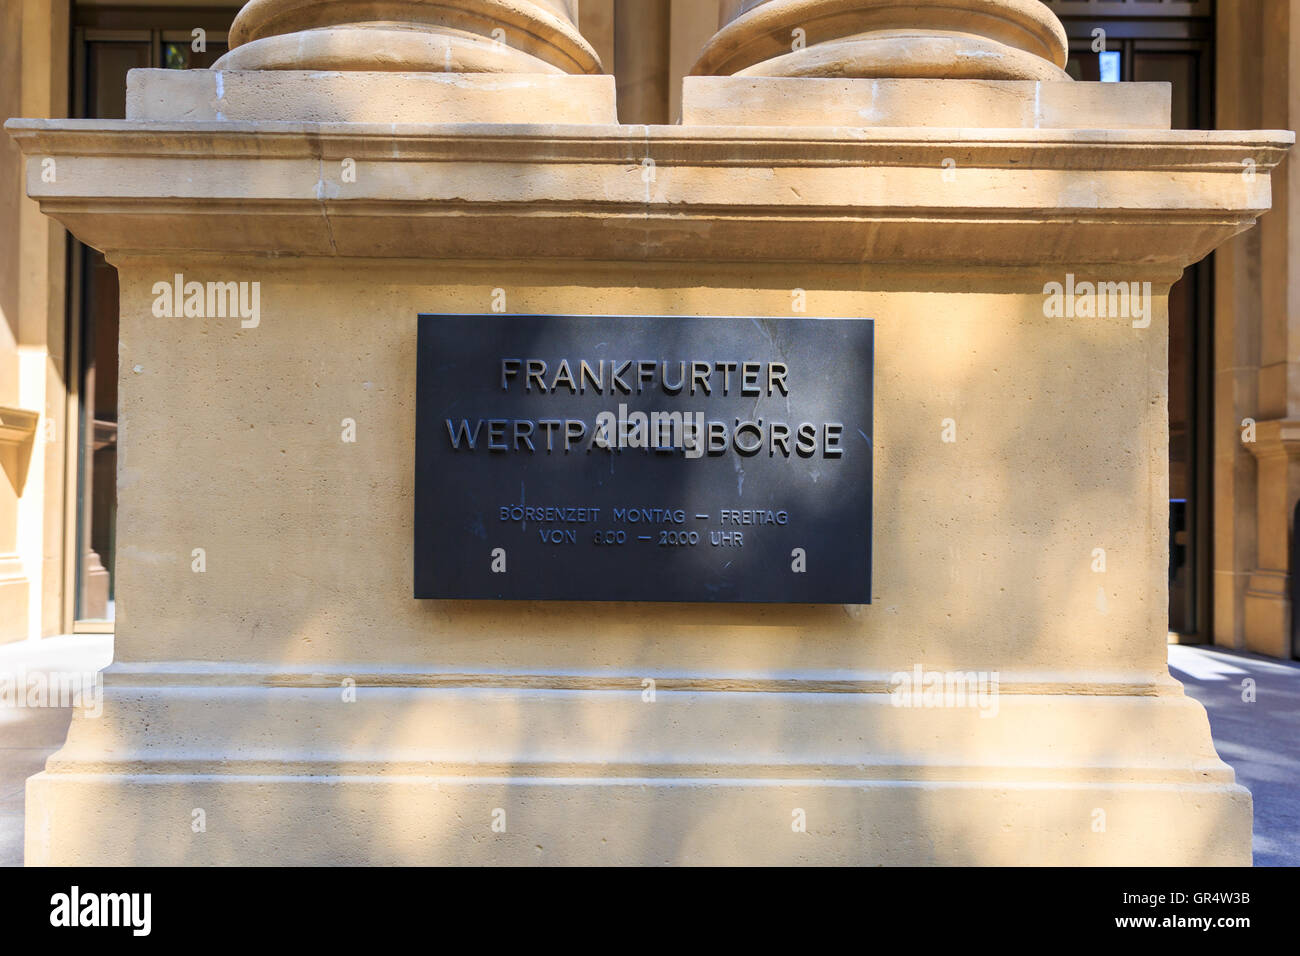 Frankfurter Wertpapierbörse sign outside the German Stock Exchange Building, Frankfurt, Germany Stock Photo